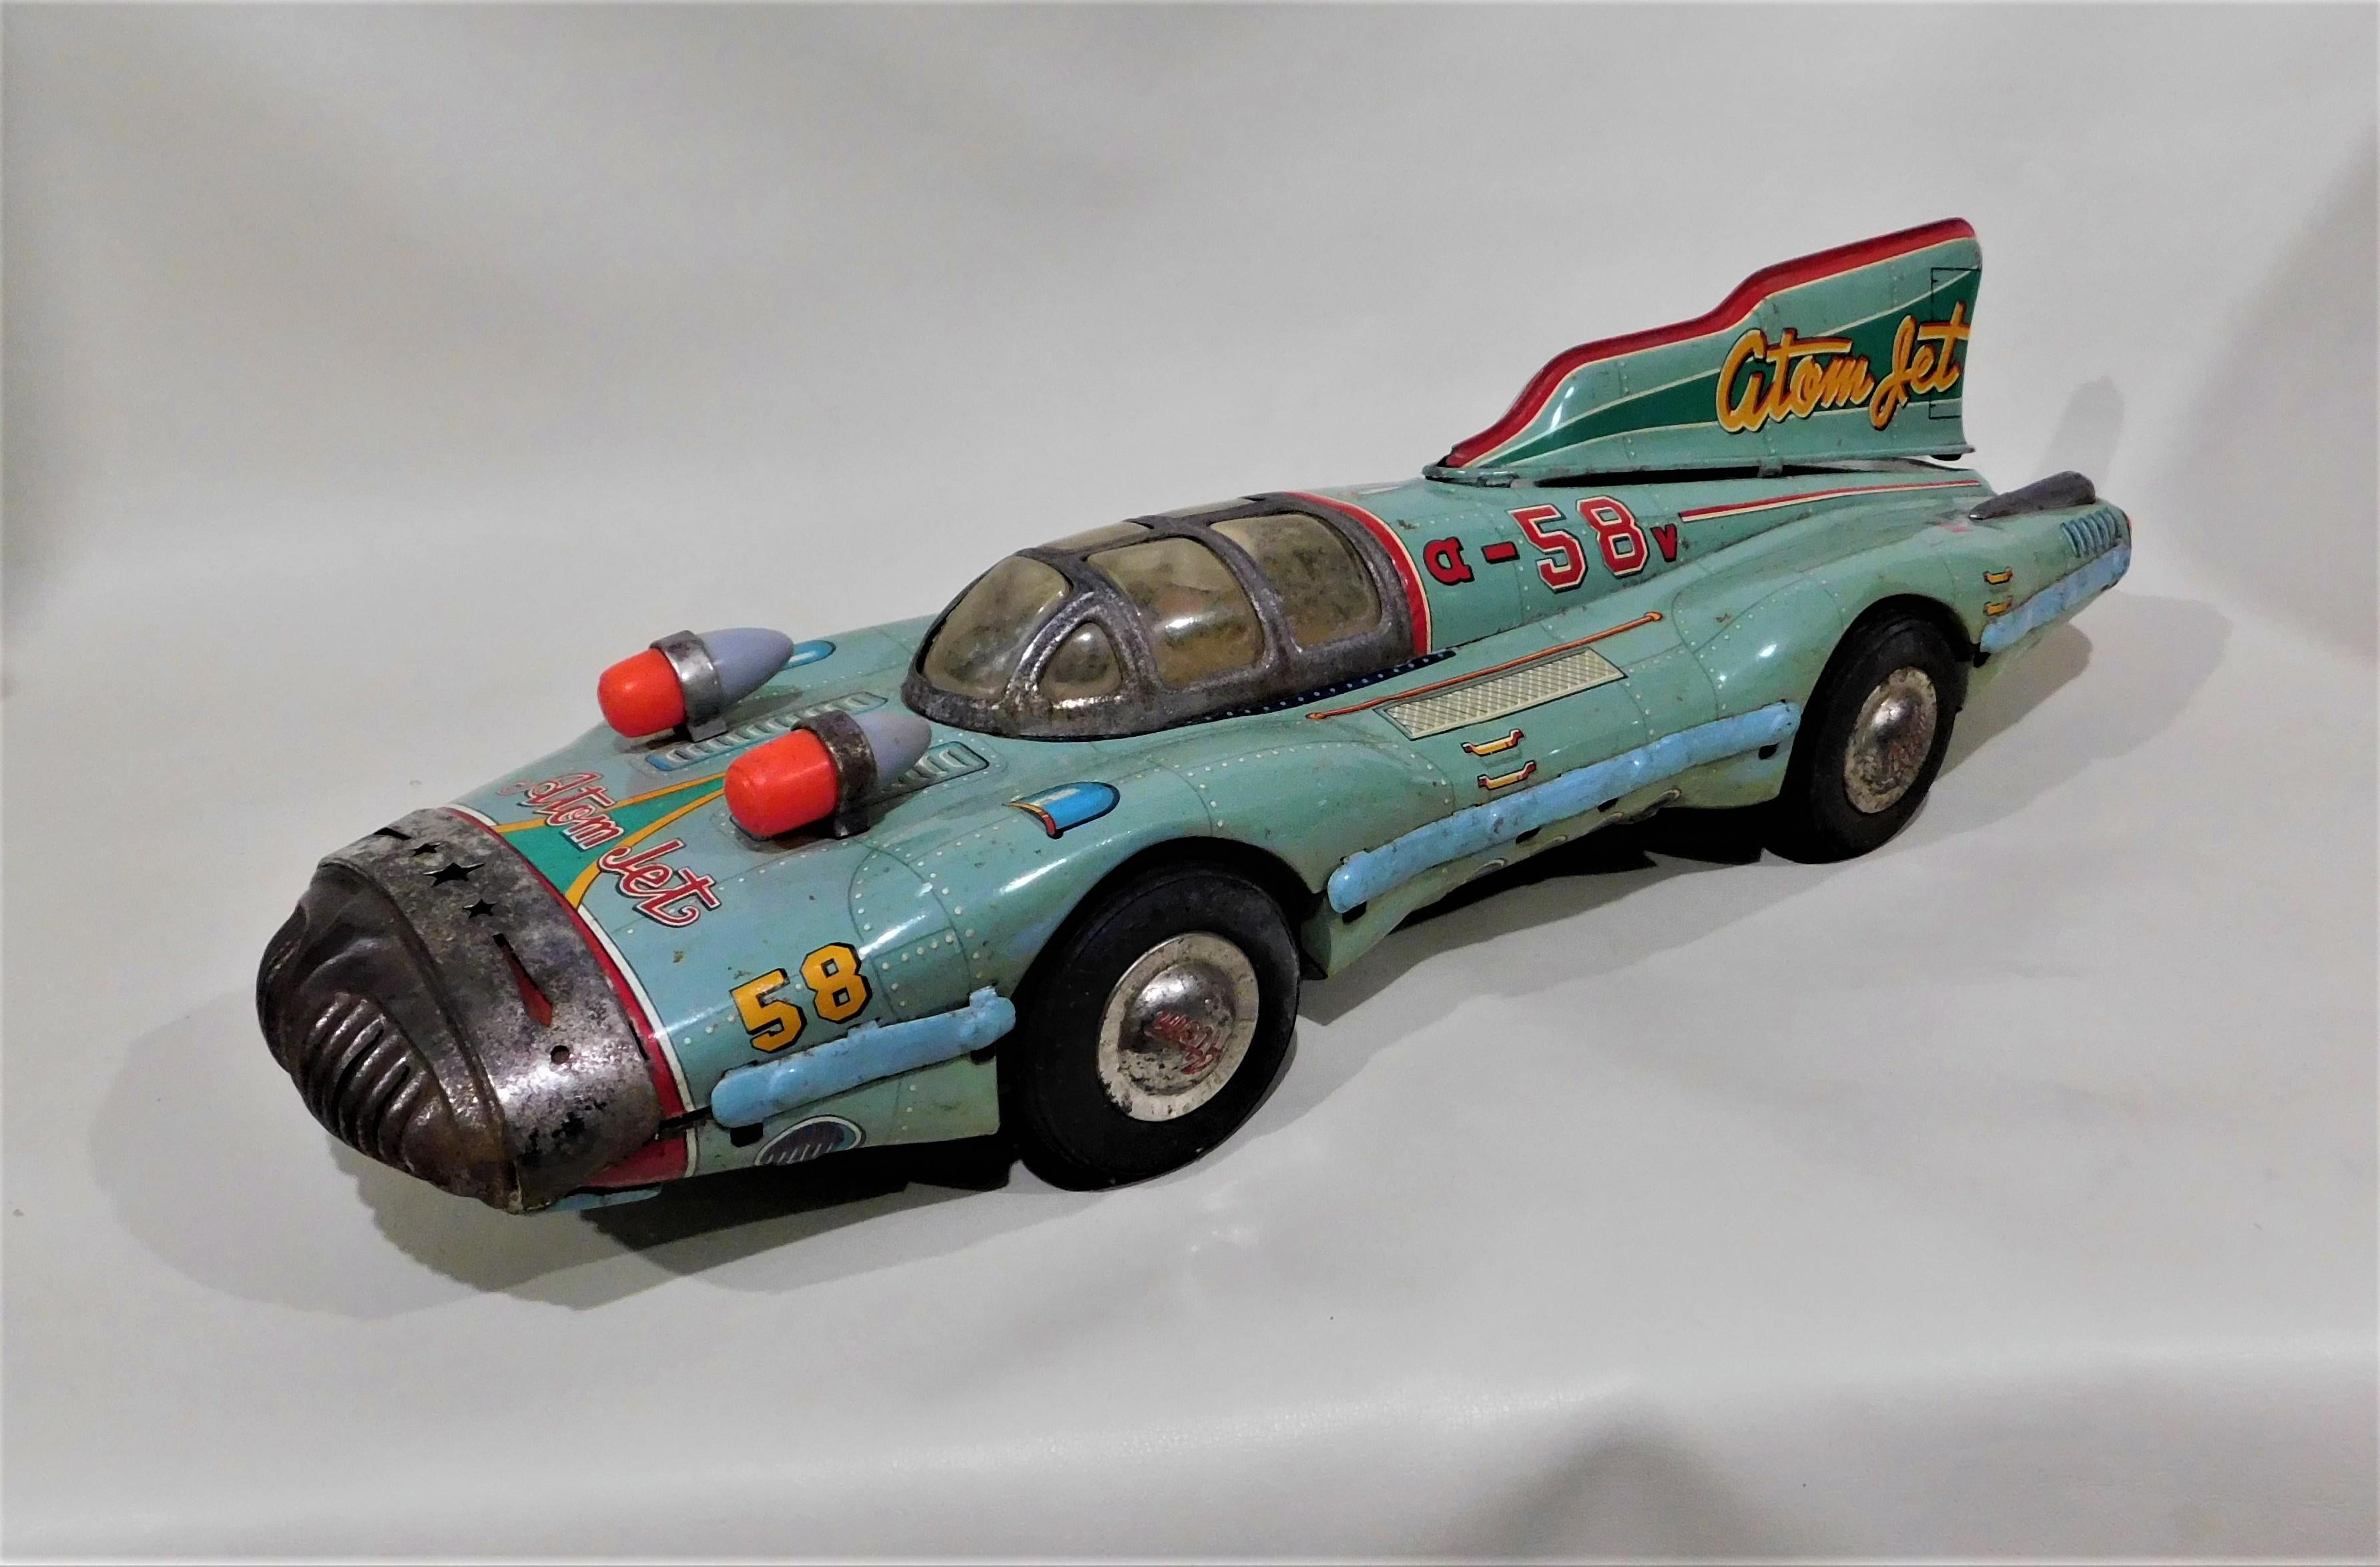 Mid-20th Century Rare 1950s Atom Jet #58 Tin Litho Friction Race Car Space Toy Yonezawa Japan